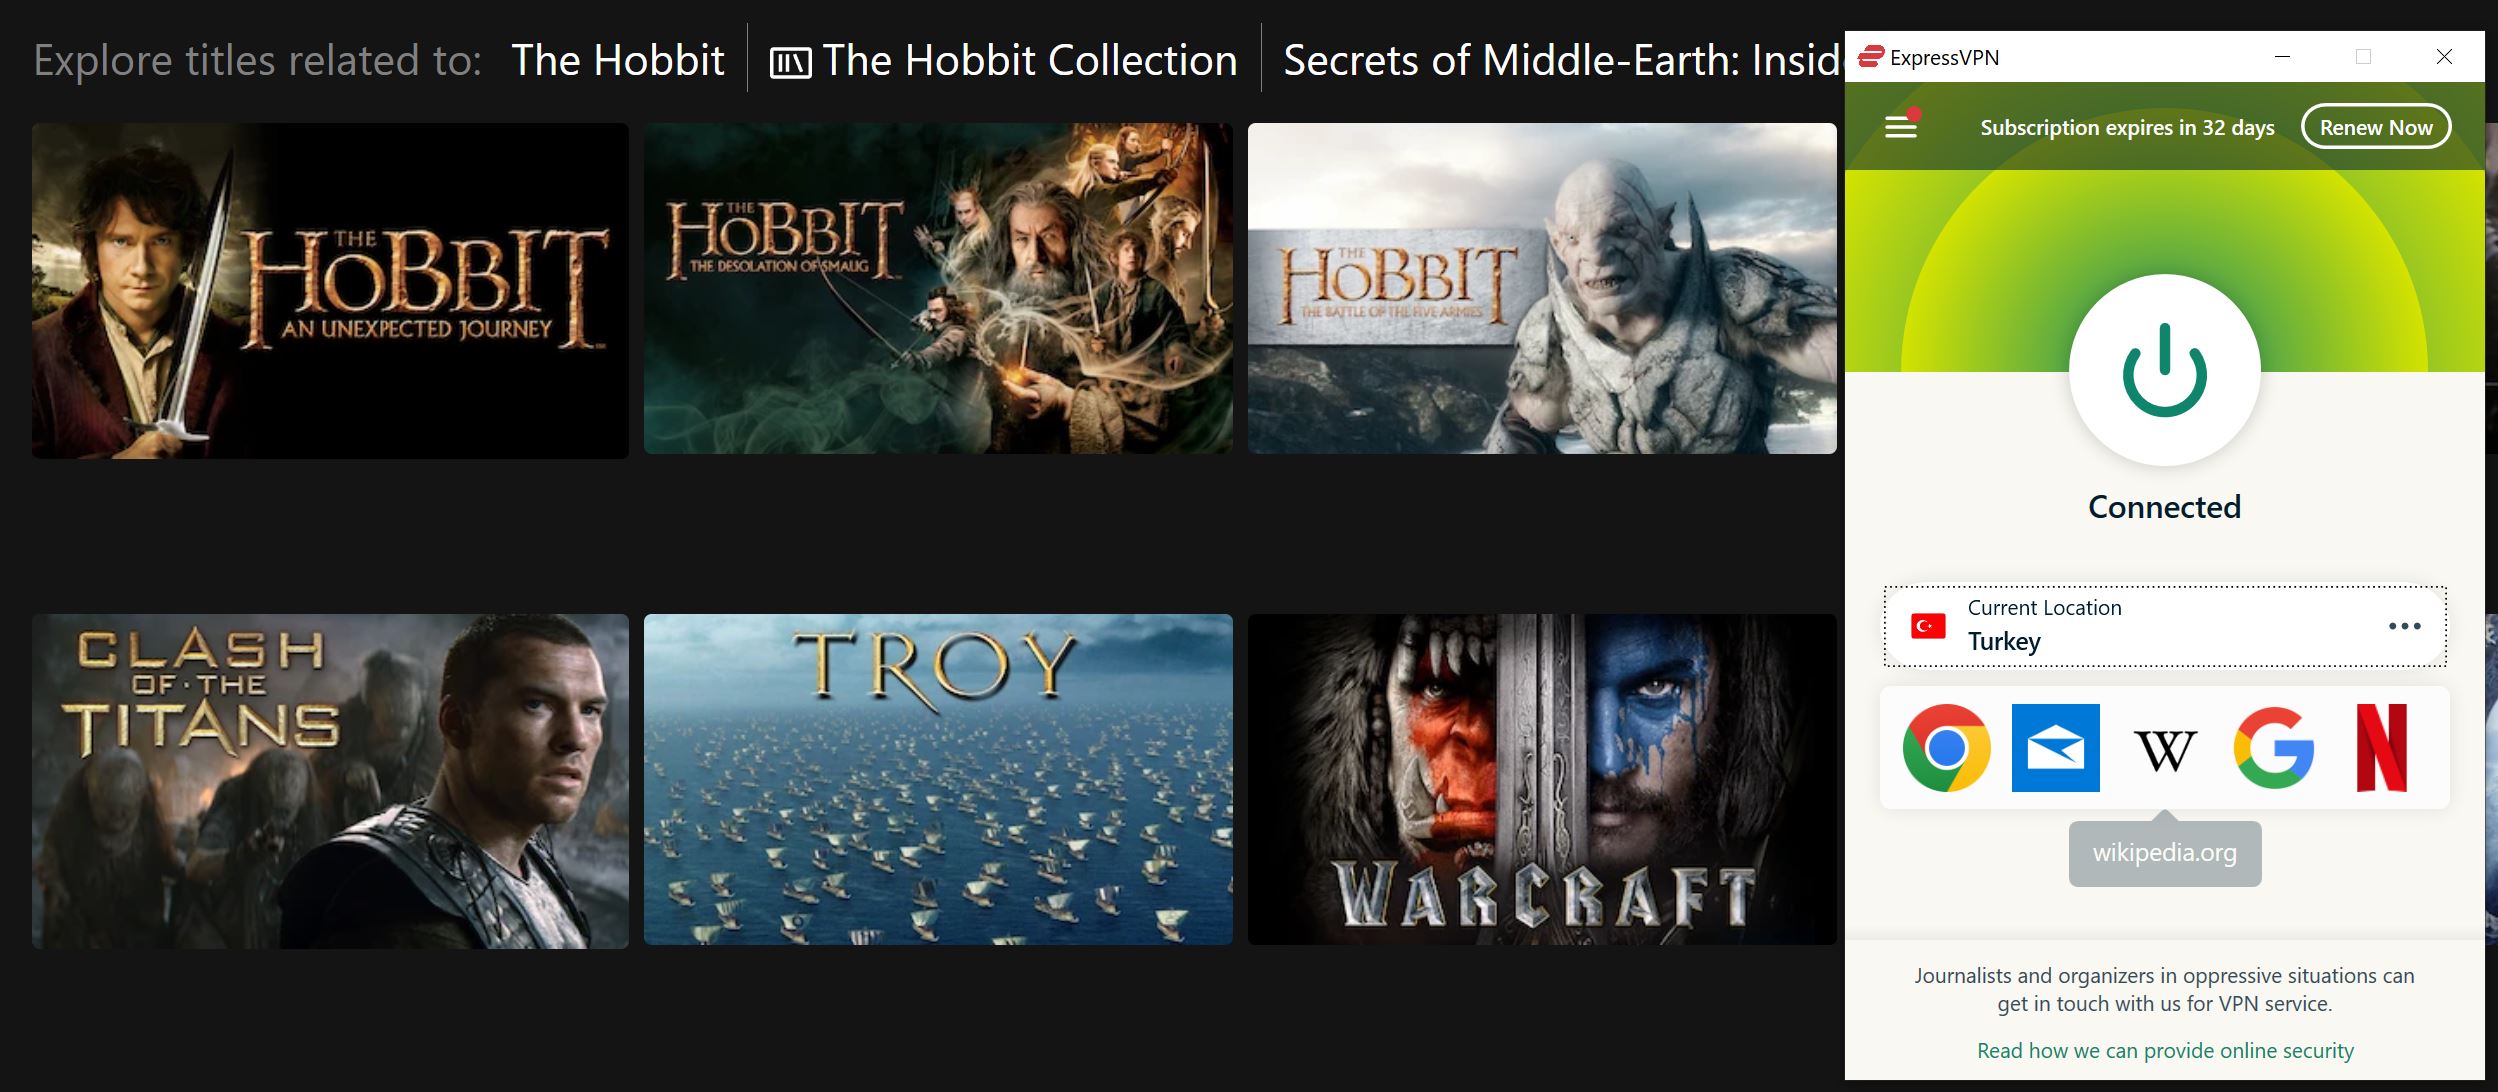 Watch The Hobbit on Netflix in 2023?